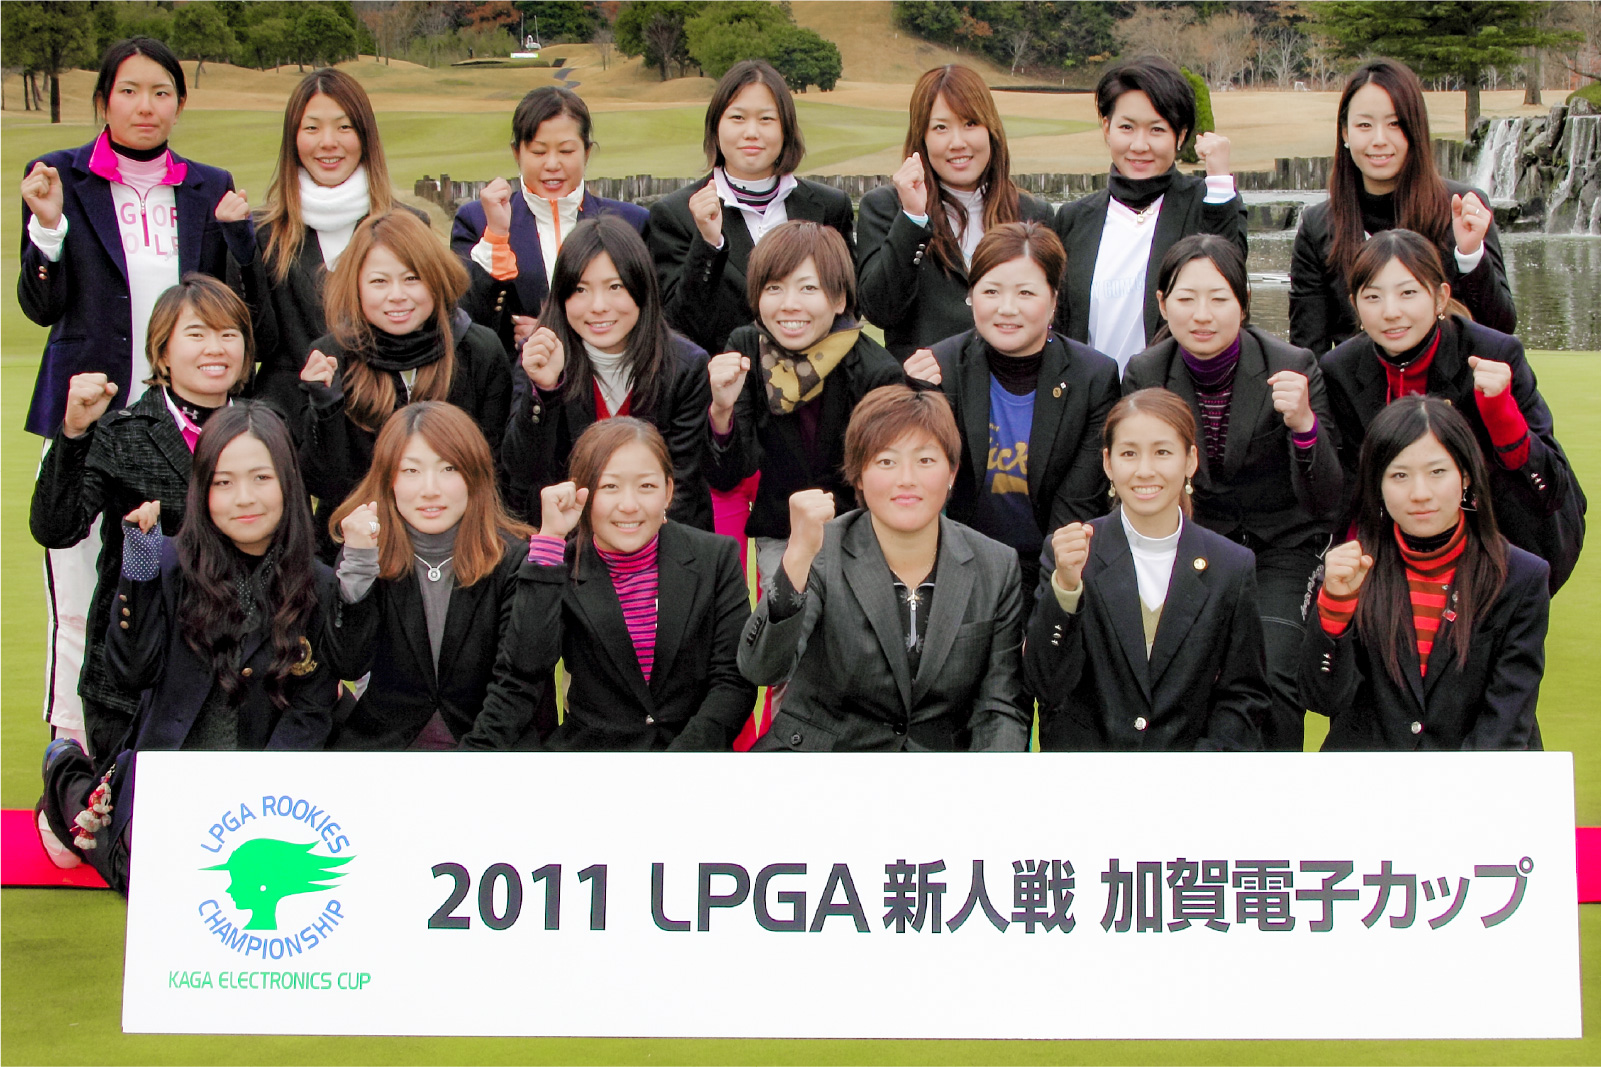 2011 LPGA 新人戦加賀電子カップ